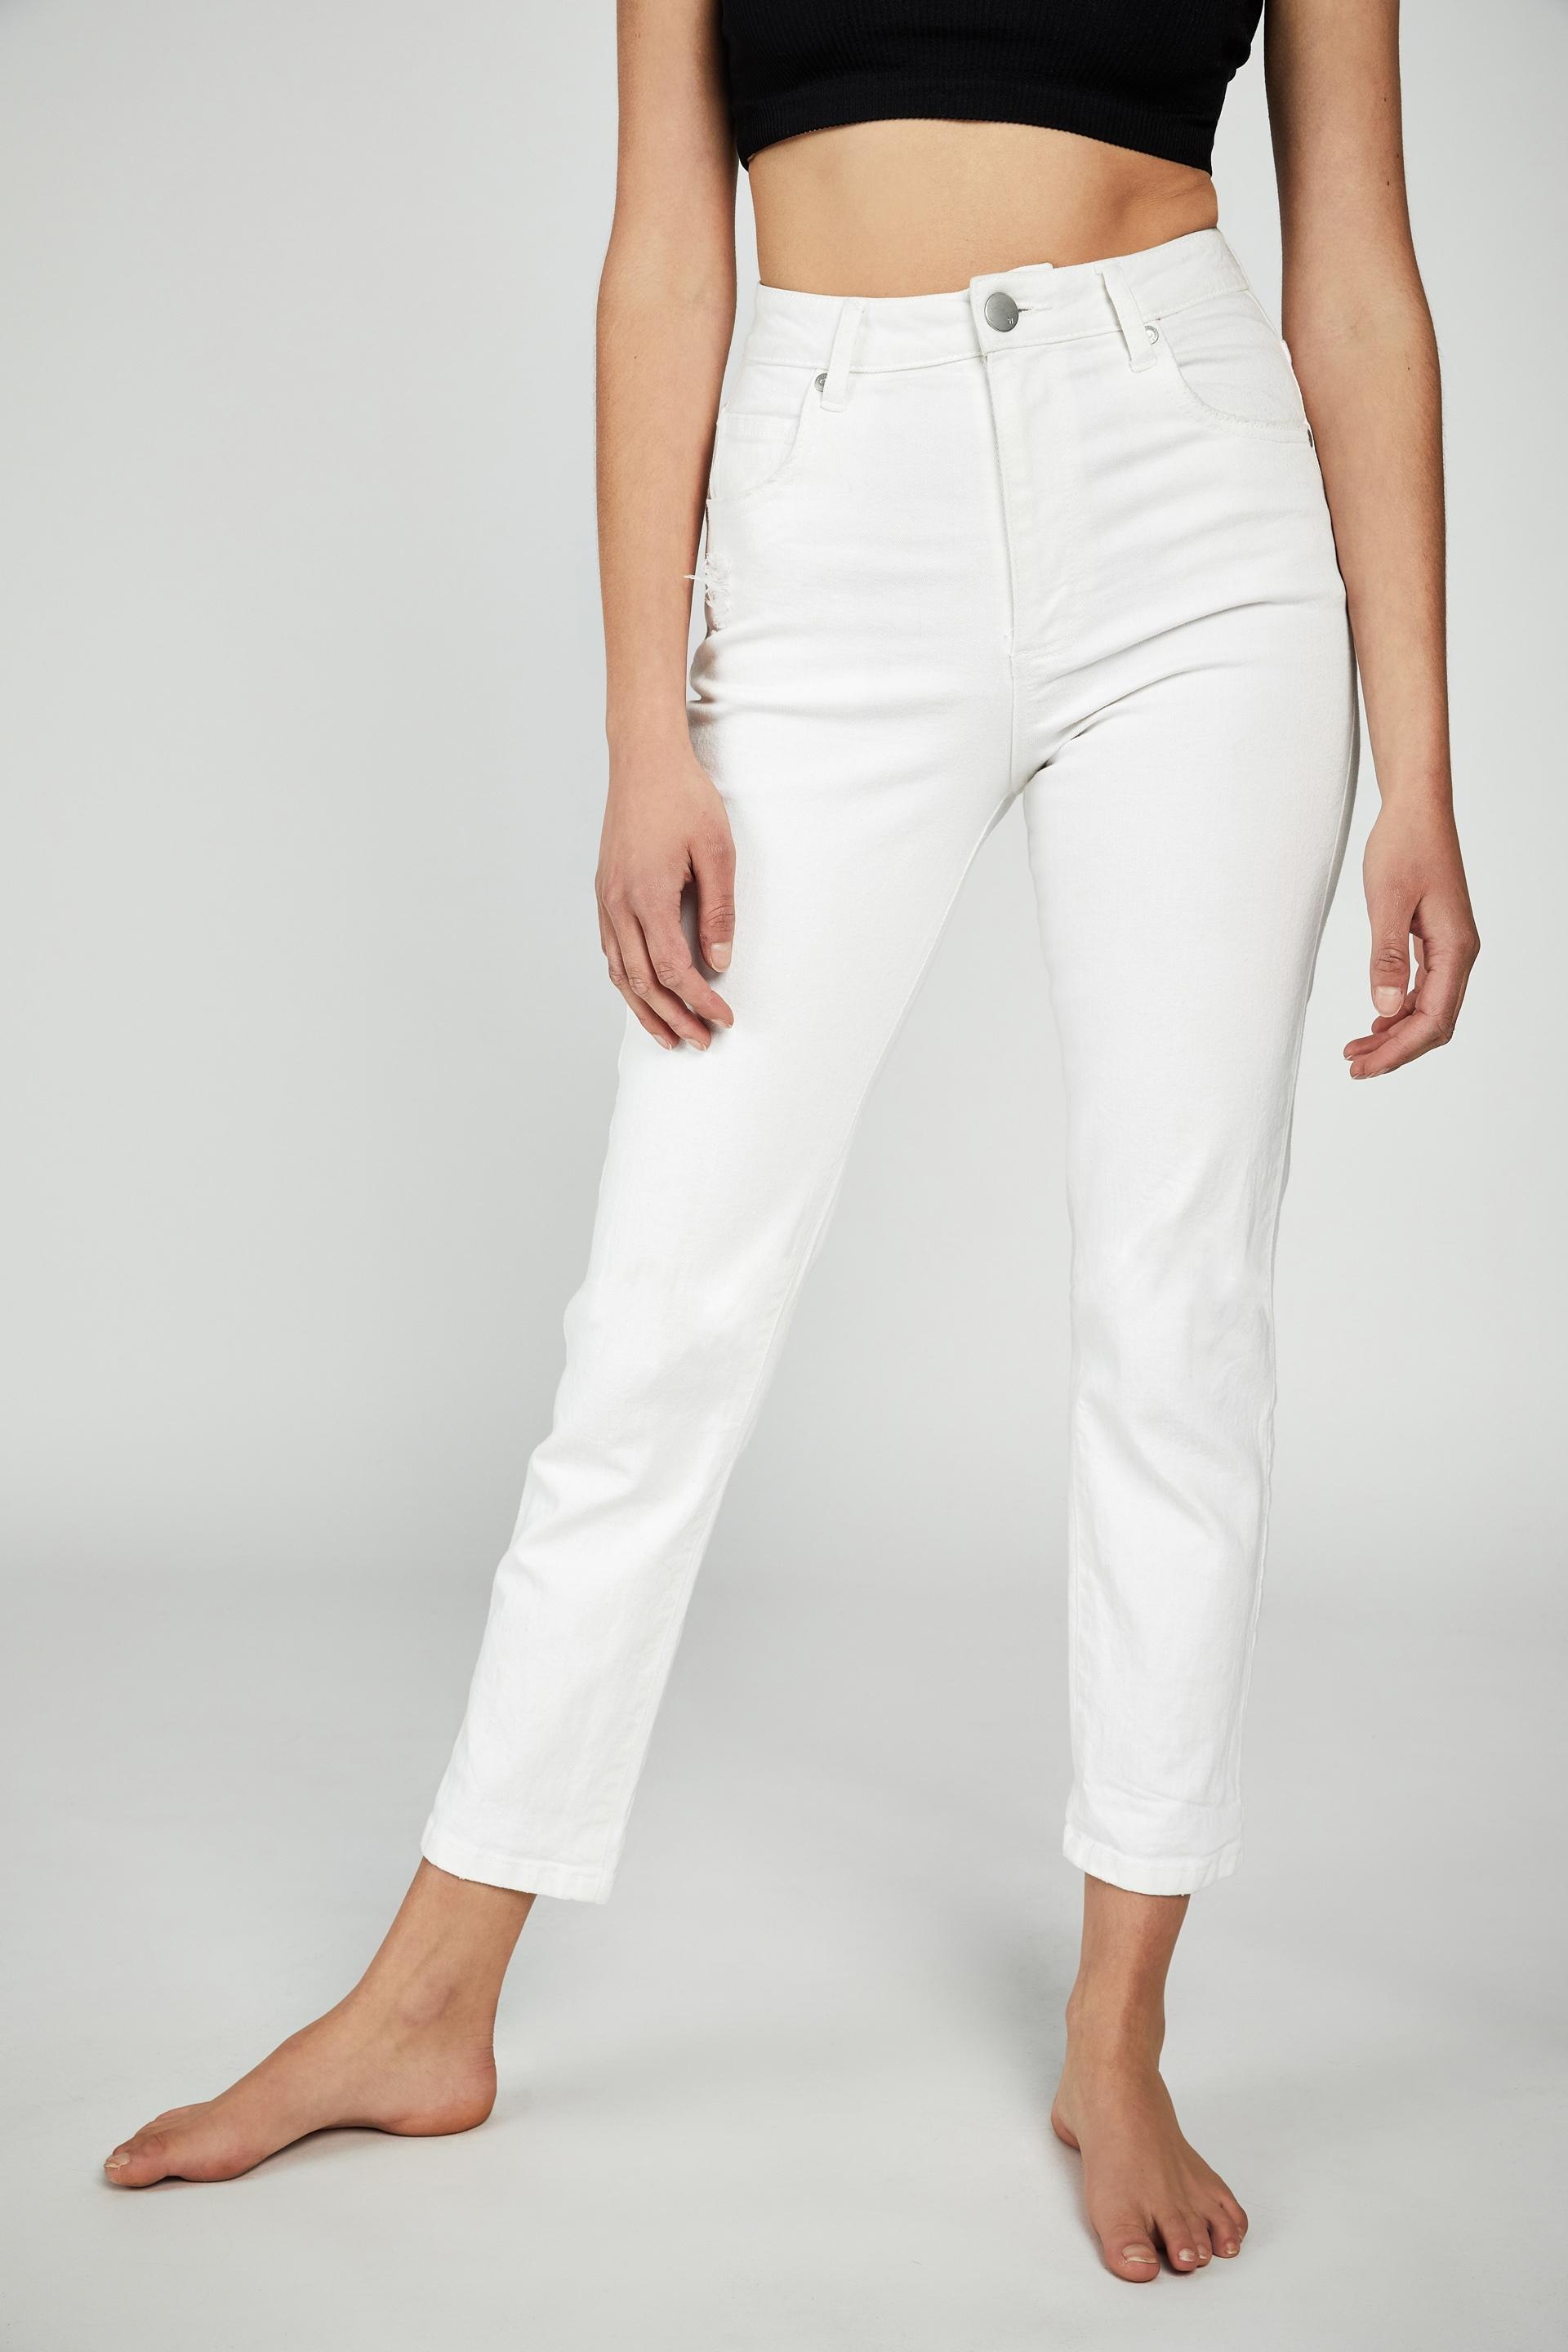 Stretch mom jeans - vintage white Cotton On Jeans | Superbalist.com